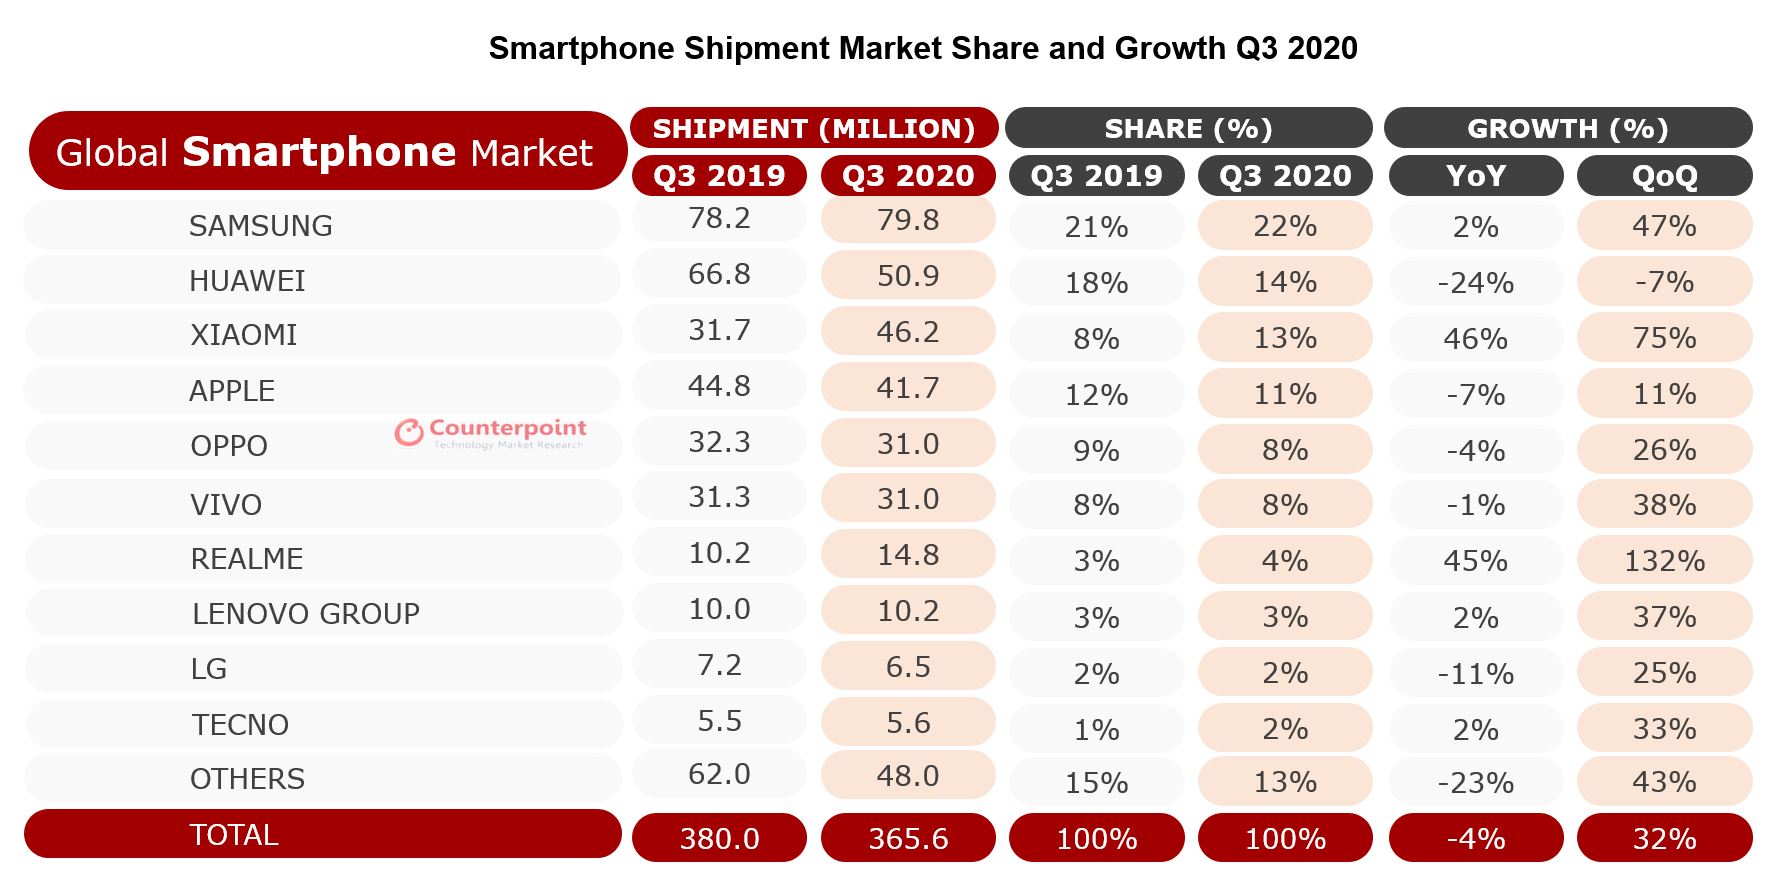 Leading Smartphone Companies Globally Q3 2020